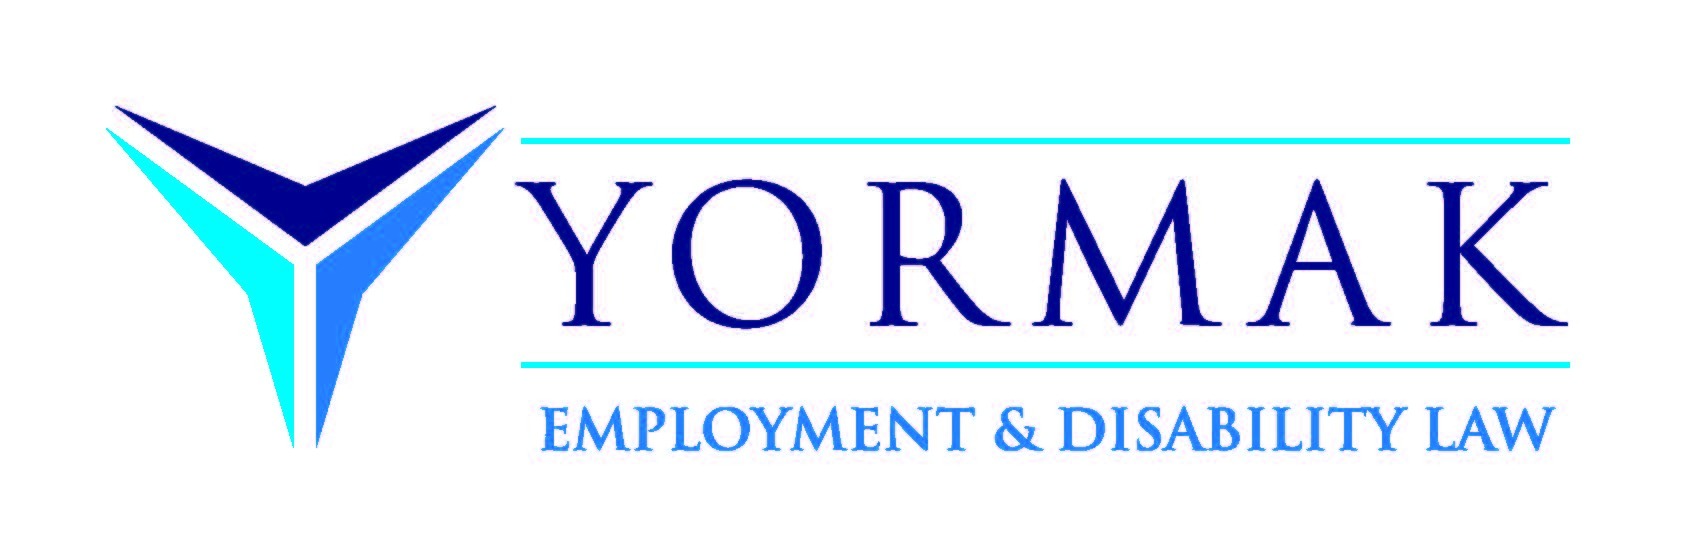 Yormak Employment & Disability Law Logo